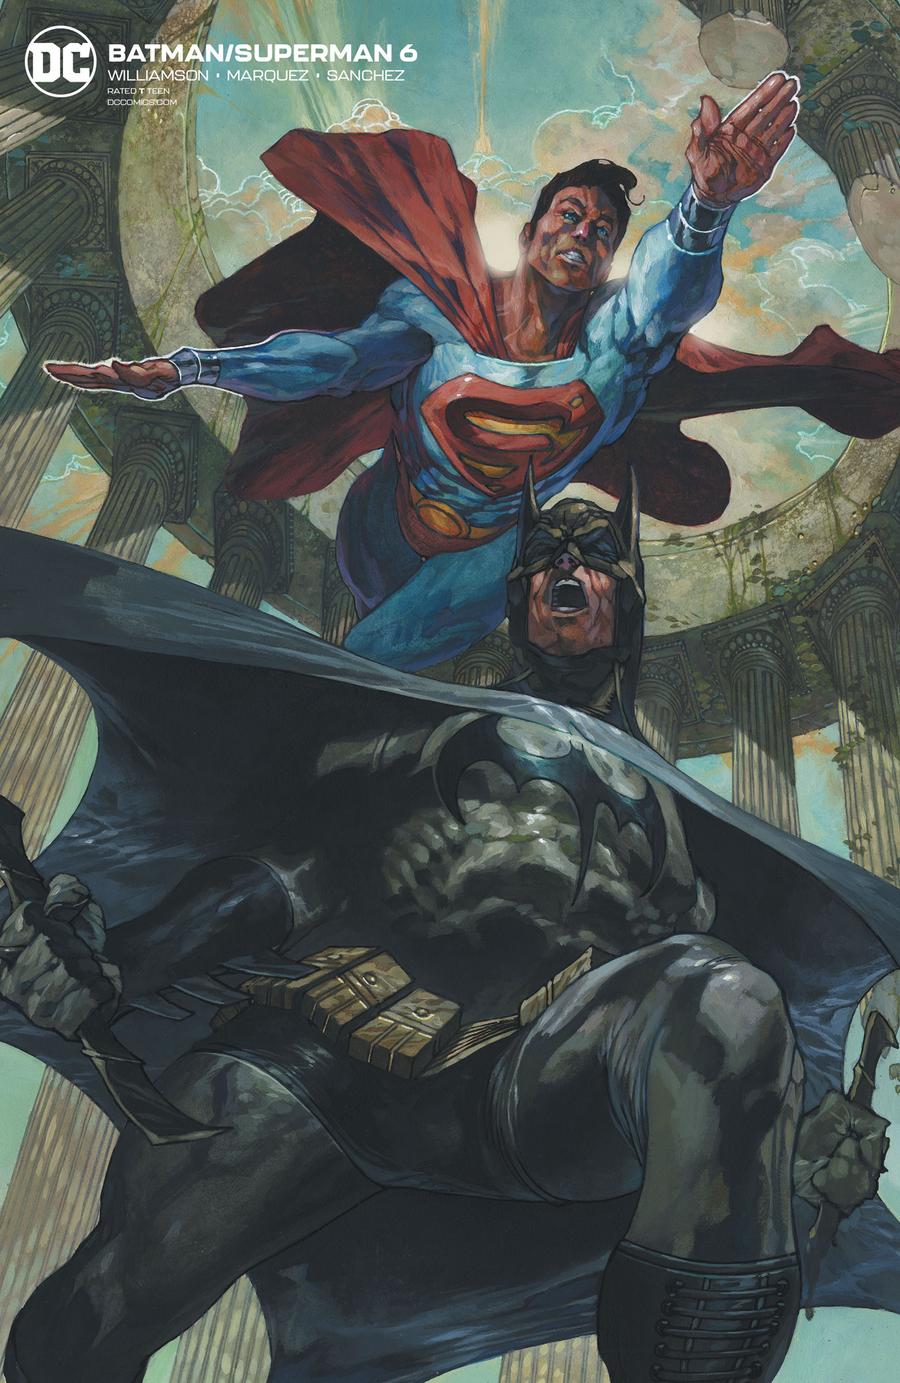 SUPERMAN #5 CARD STOCK VARIANT COVER BATMAN 